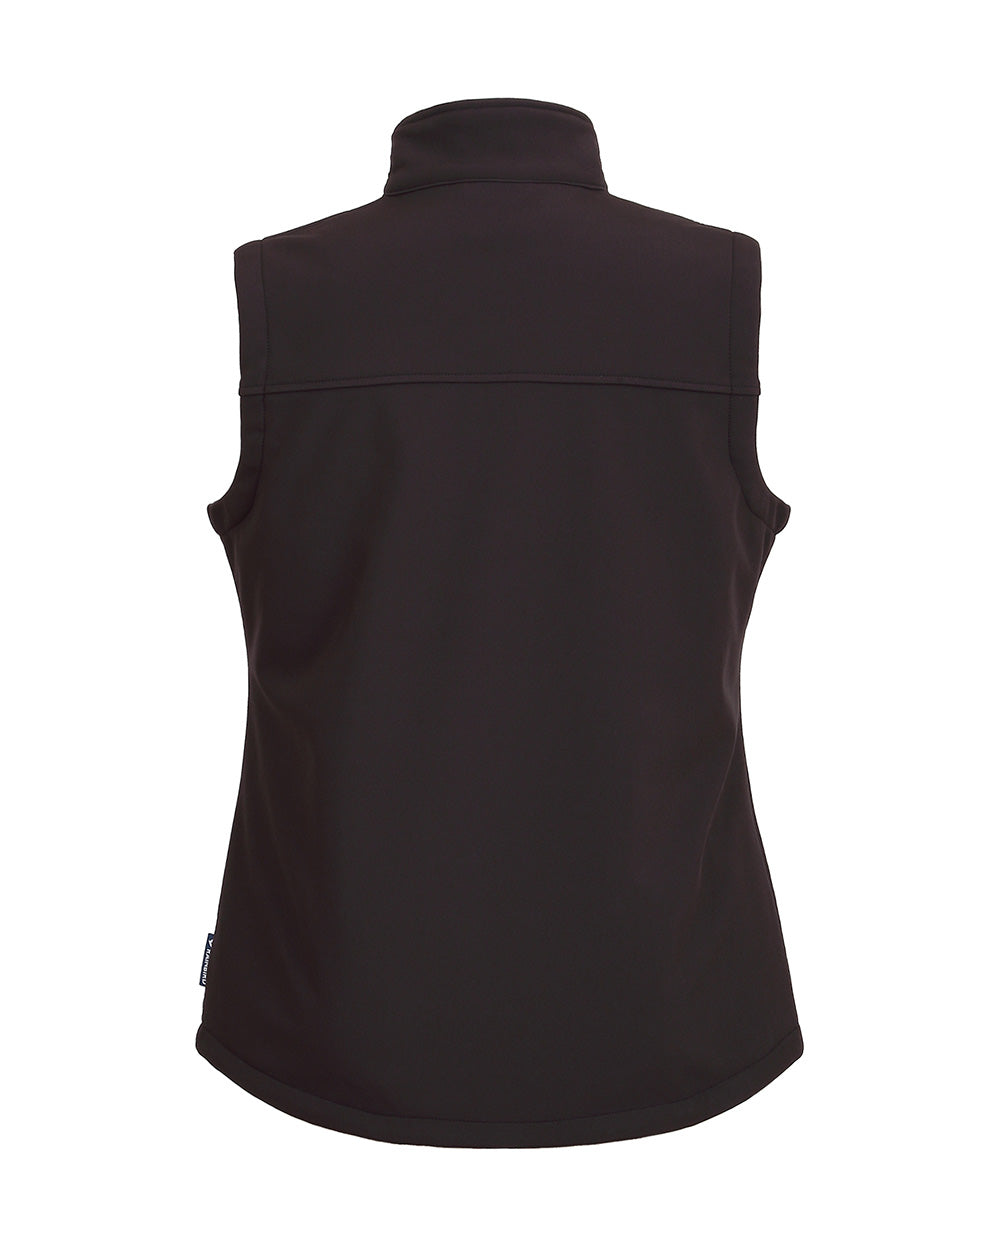 Freeman Softshell Vest in Black